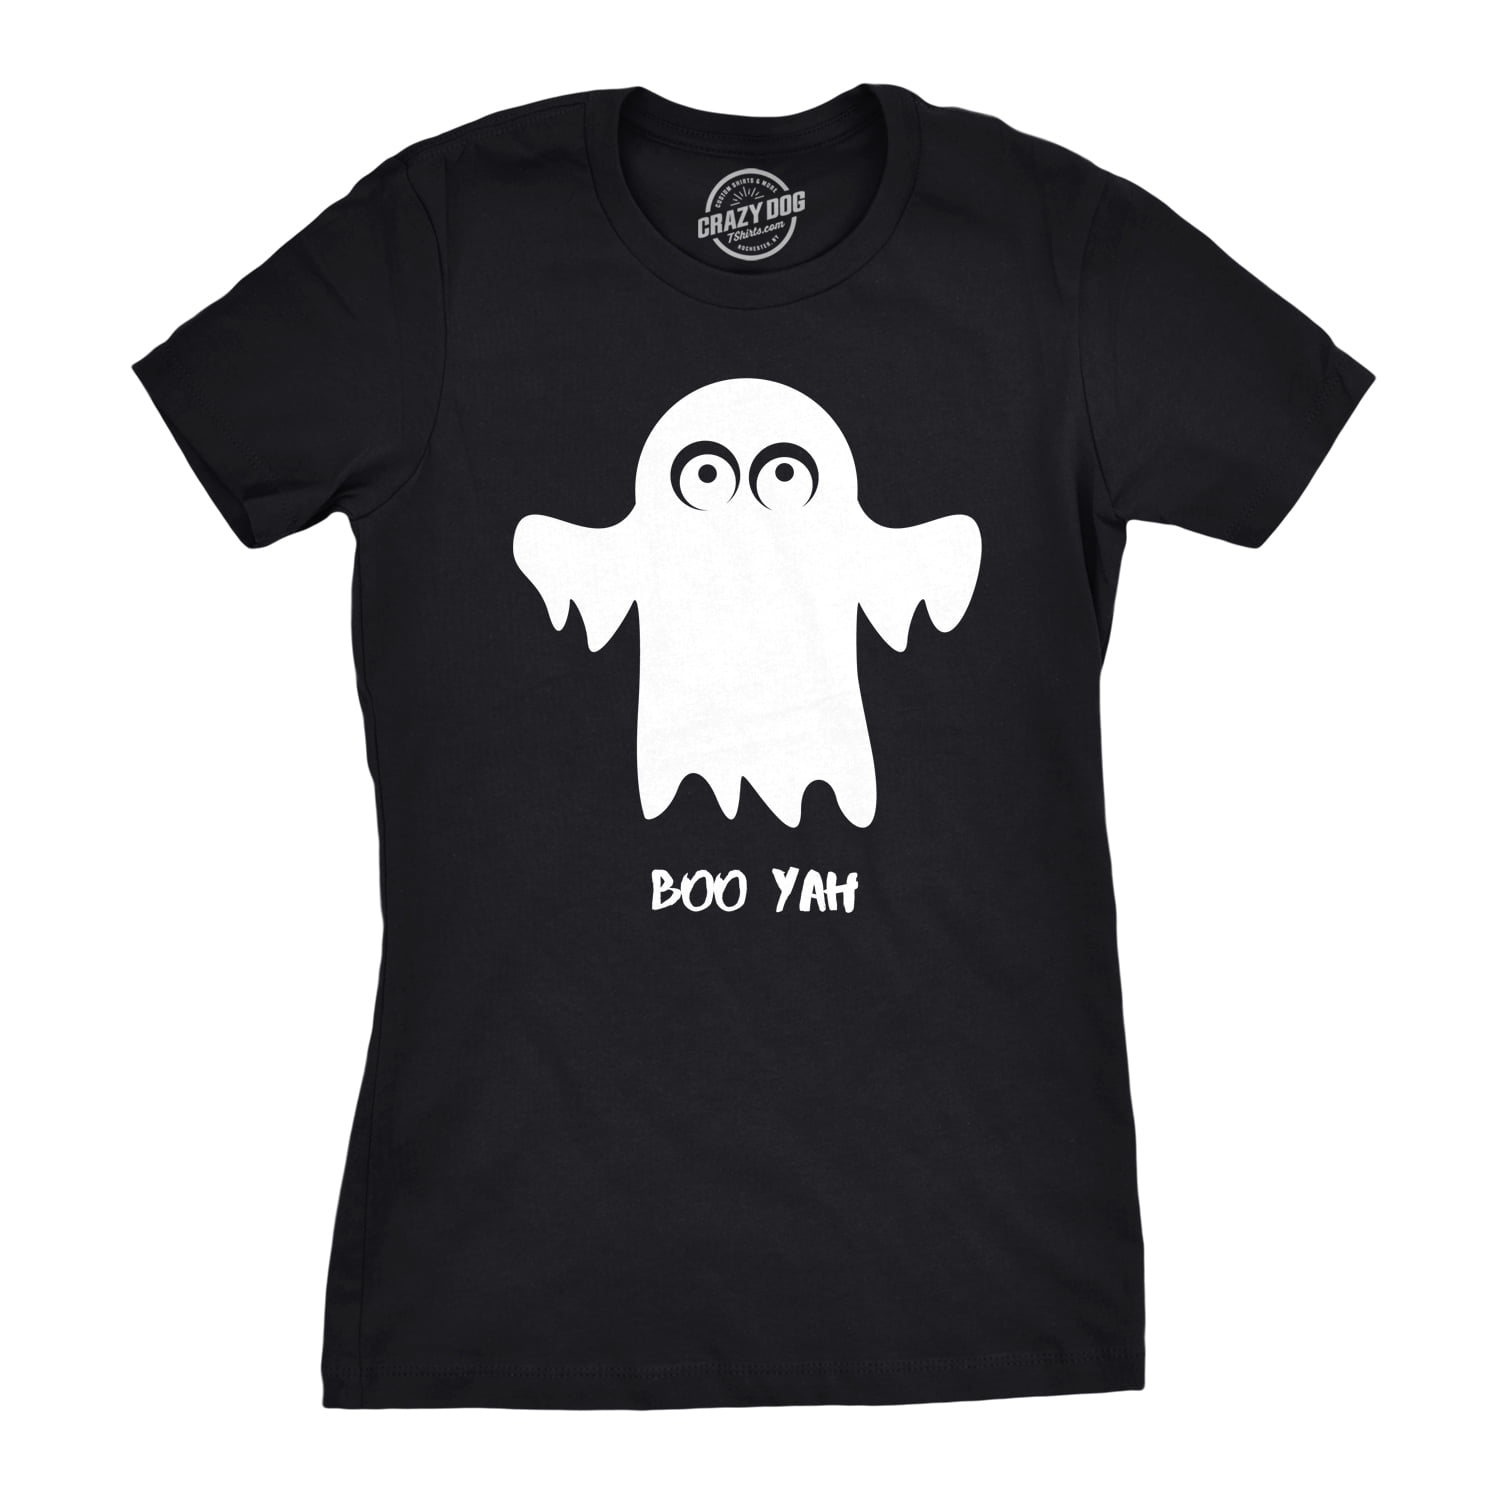 Tis The Season Shirt Halloween Ghost Shirt Cute Halloween Shirts Unisex Tee Halloween Shirt